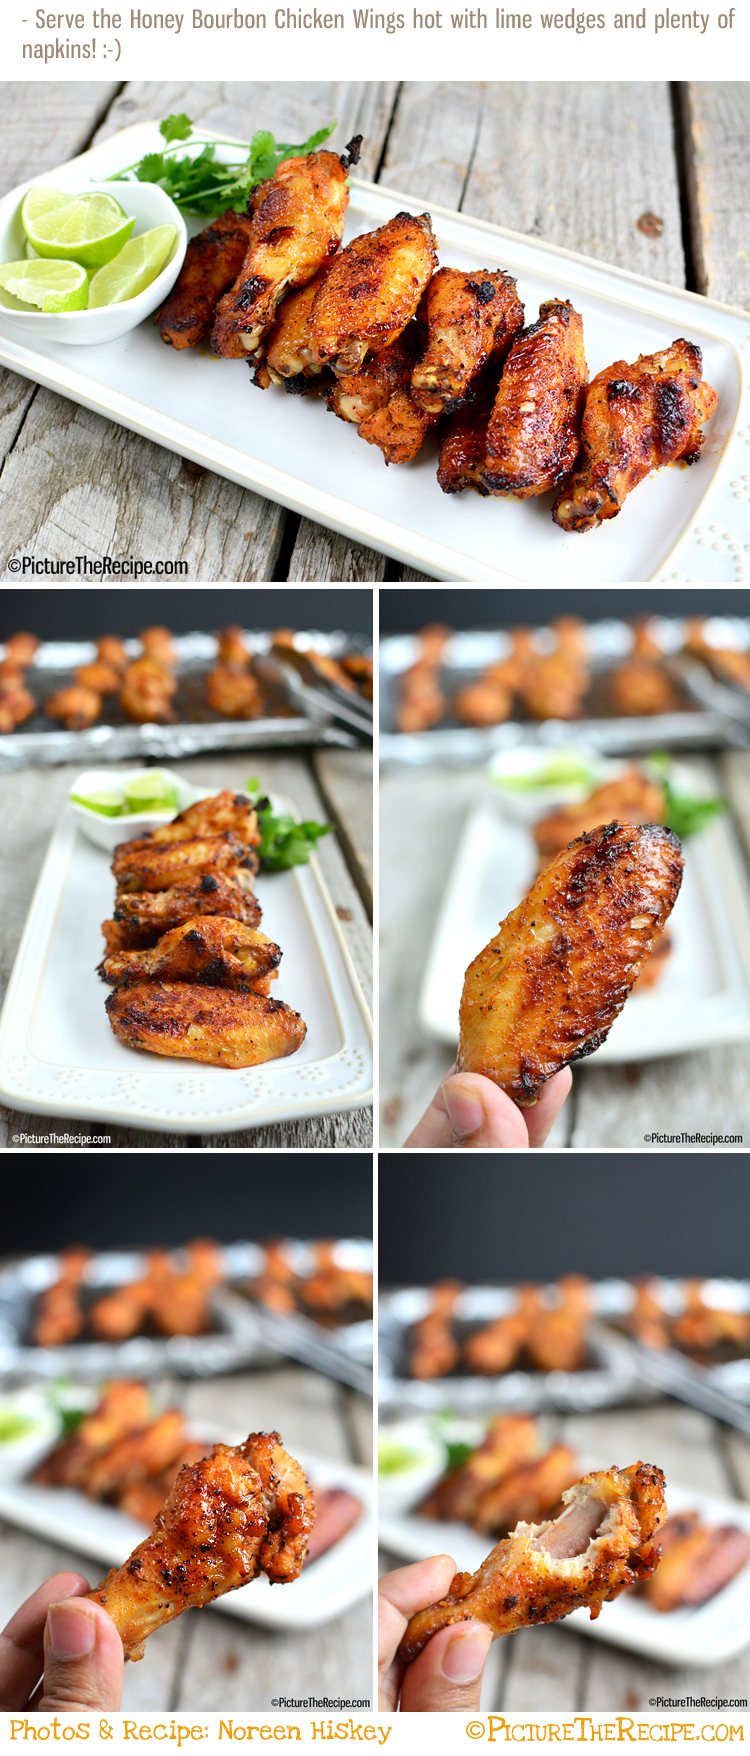 Baken Honey Bourbon Chicken Wings Recipe by PictureTheRecipe com